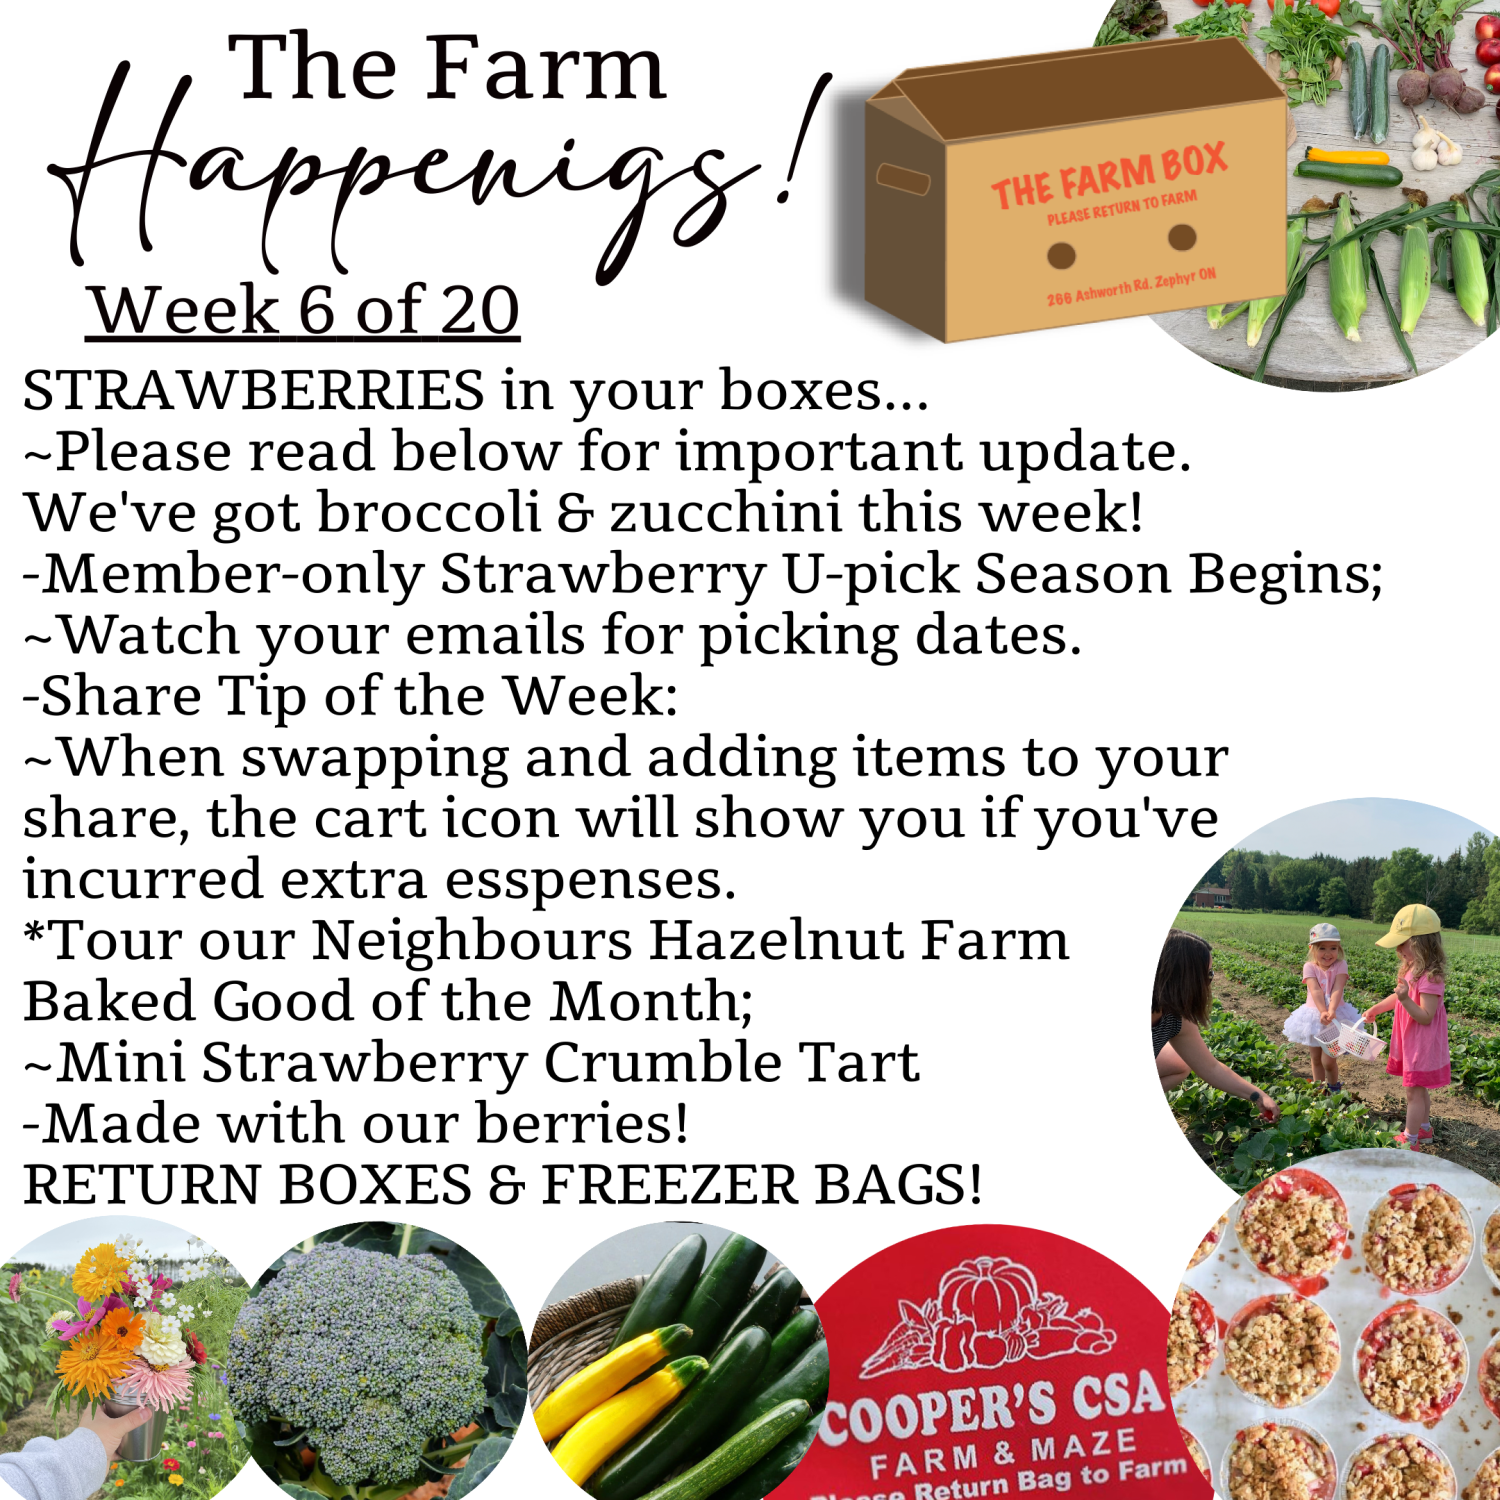 Previous Happening: "The Farm Box"-Coopers CSA Farm Farm Happenings Week 6 of 20